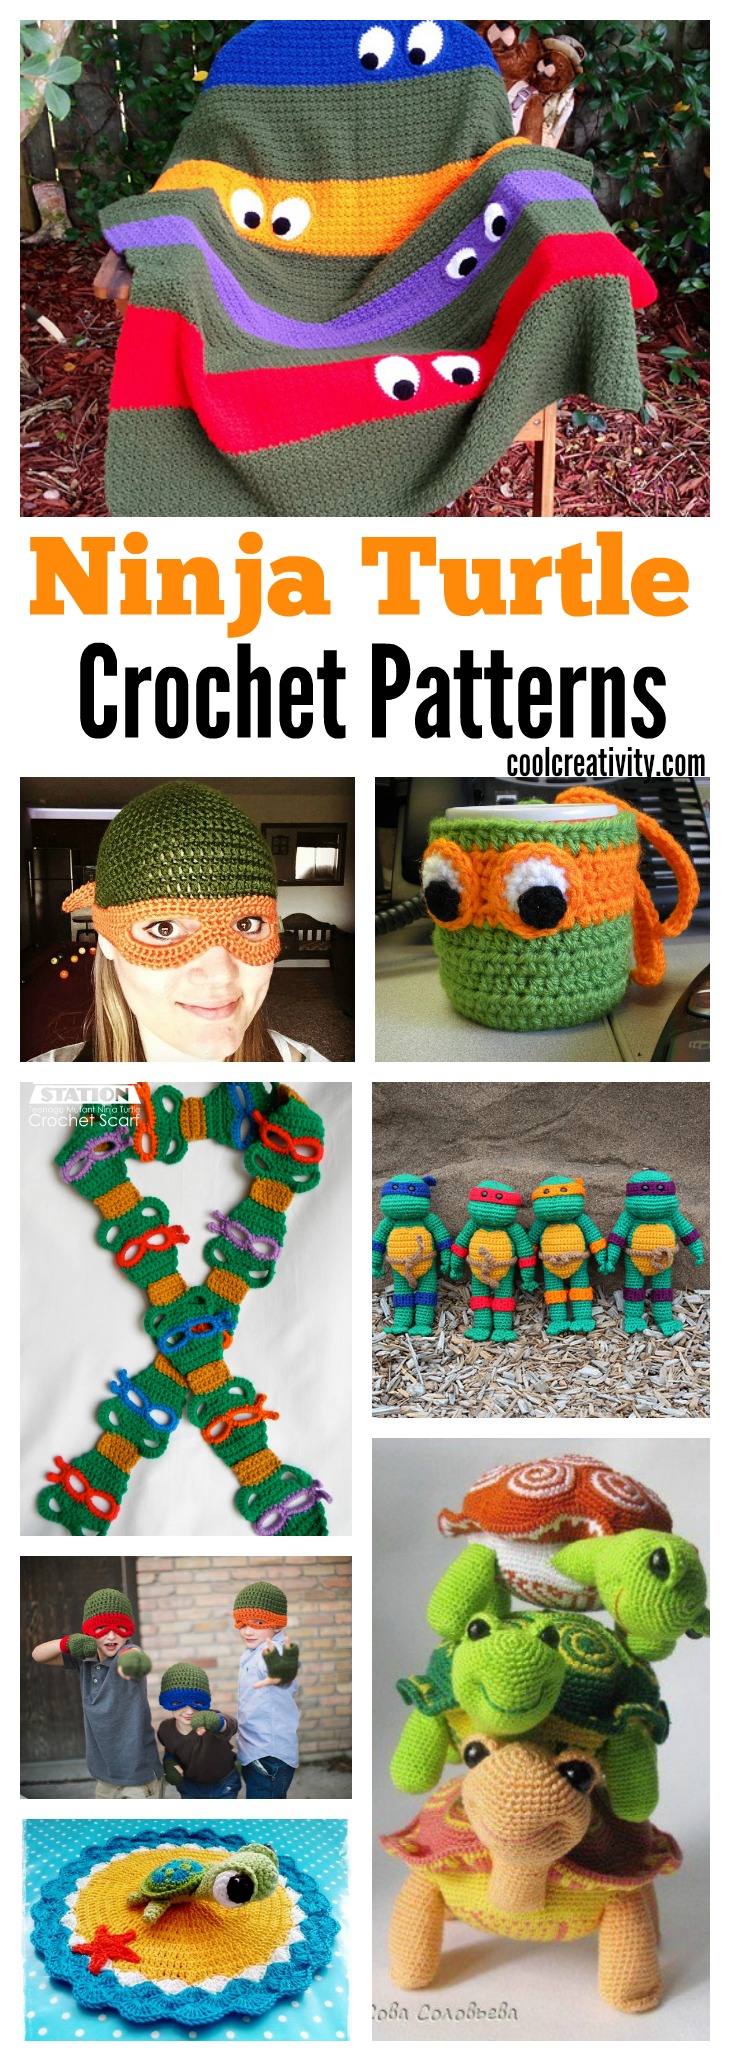 Crochet Ninja Turtle Patterns